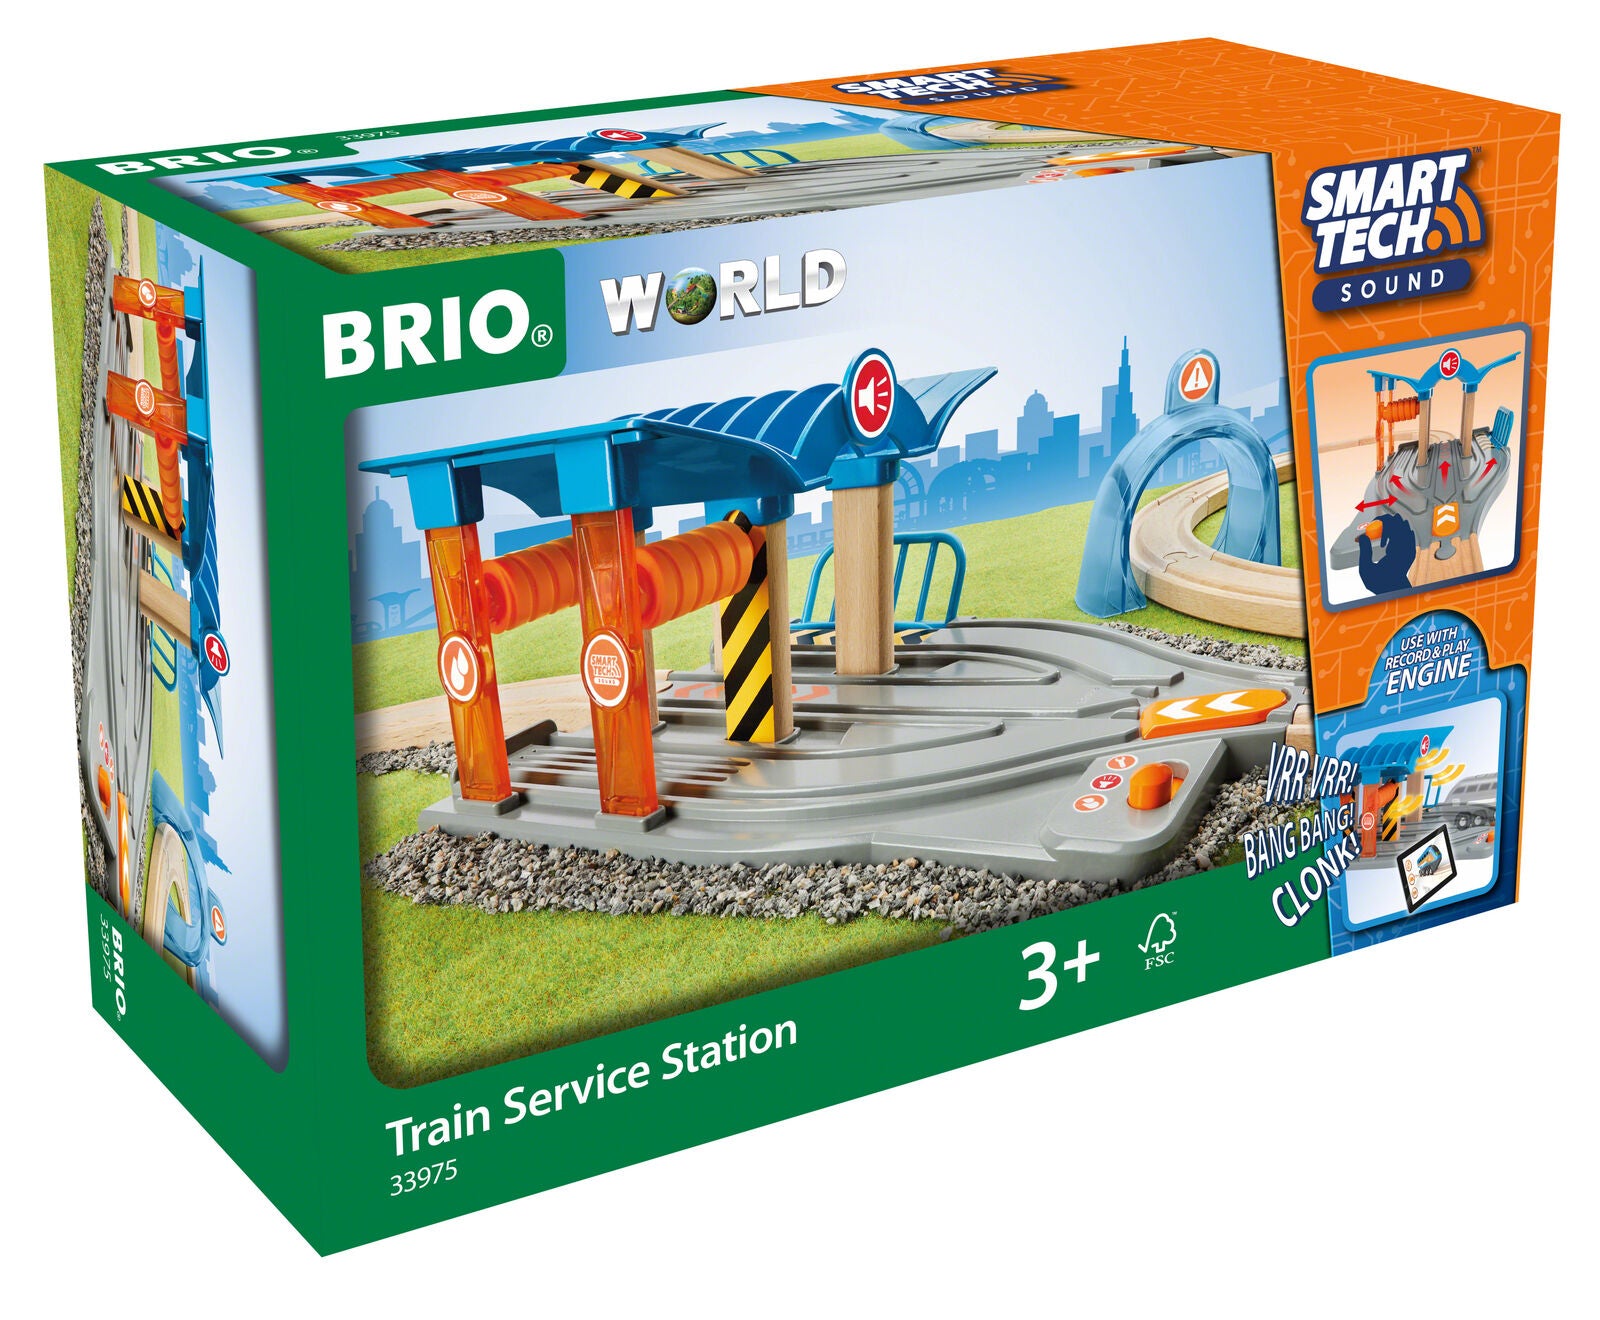 33975 BRIO Smart Tech Sound - Train Service Station Wooden Plastic Railway Train